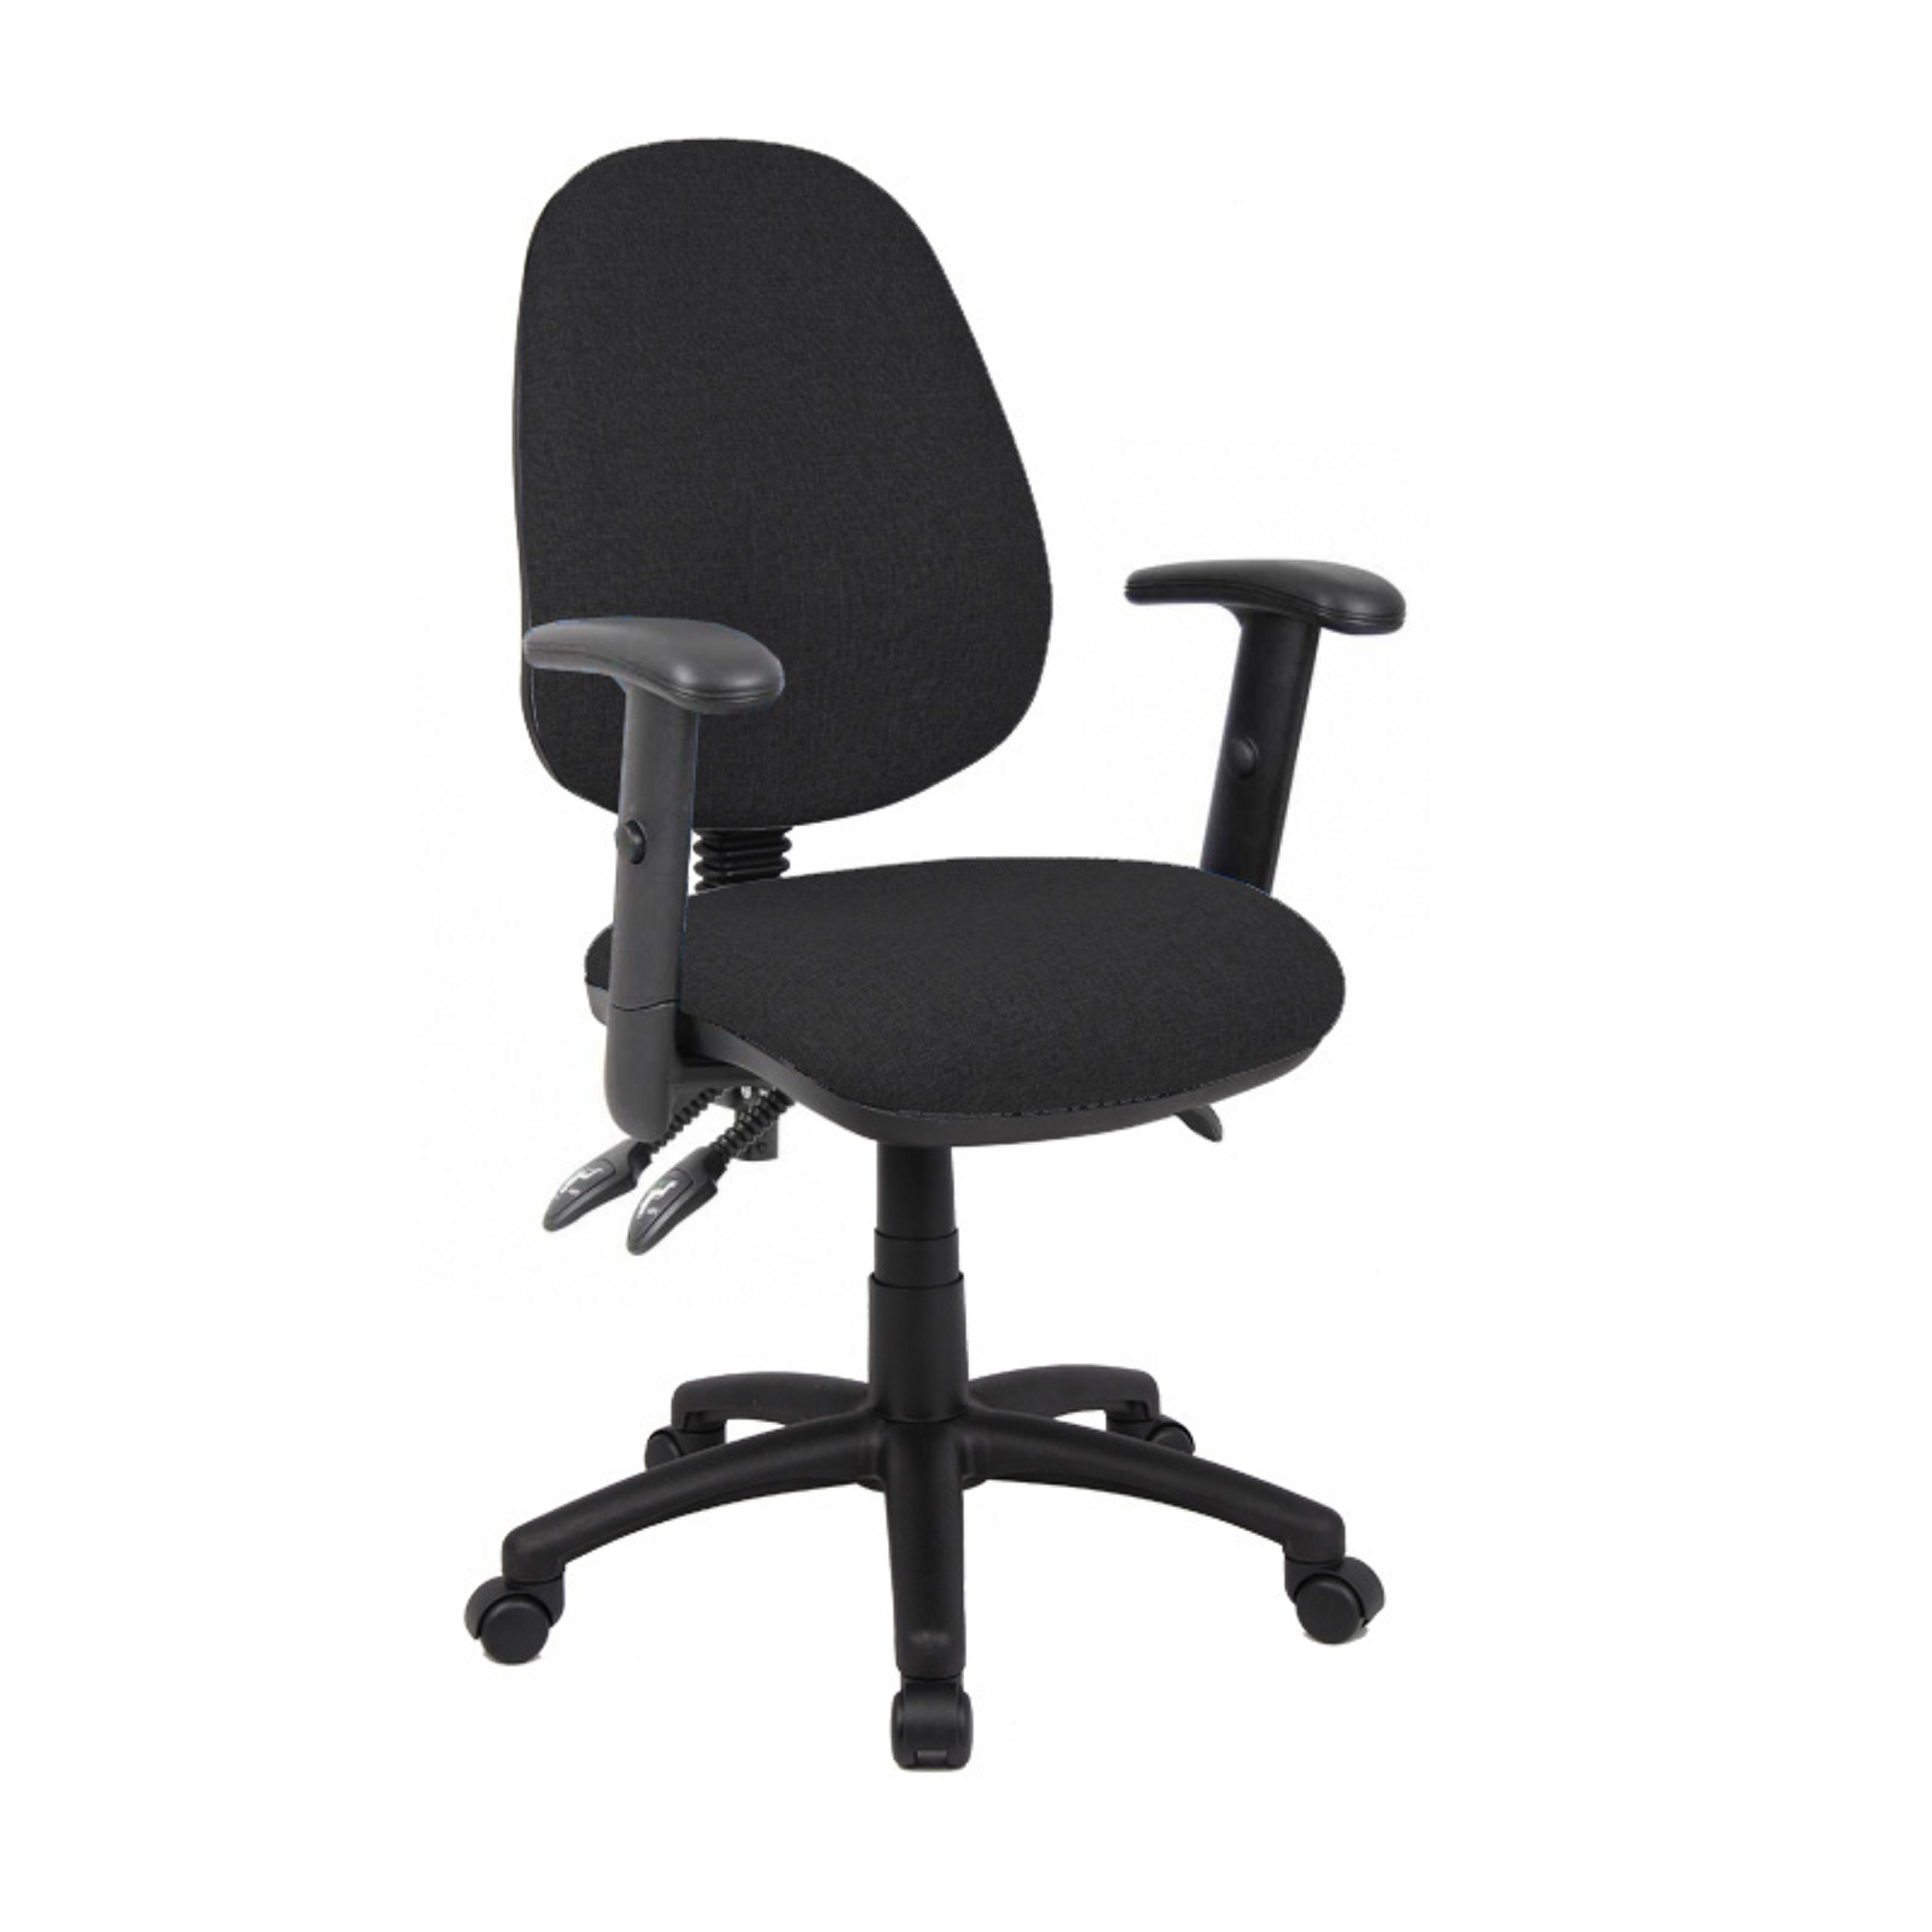 Vantage 3 Lever Adjust Arms Chair Blk